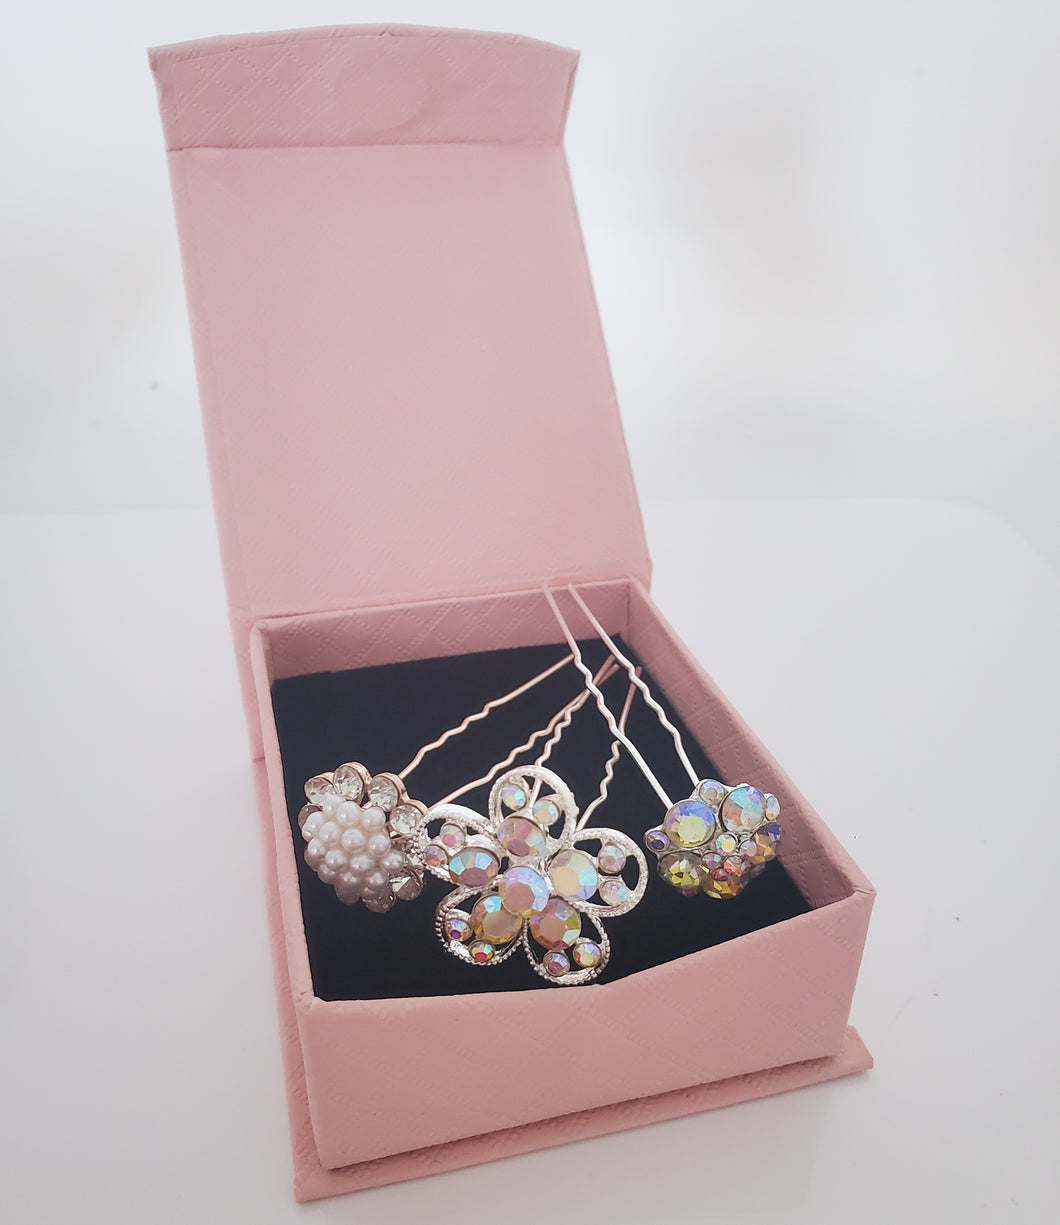 Rhinestone Hair Pins with Pink Gift Box